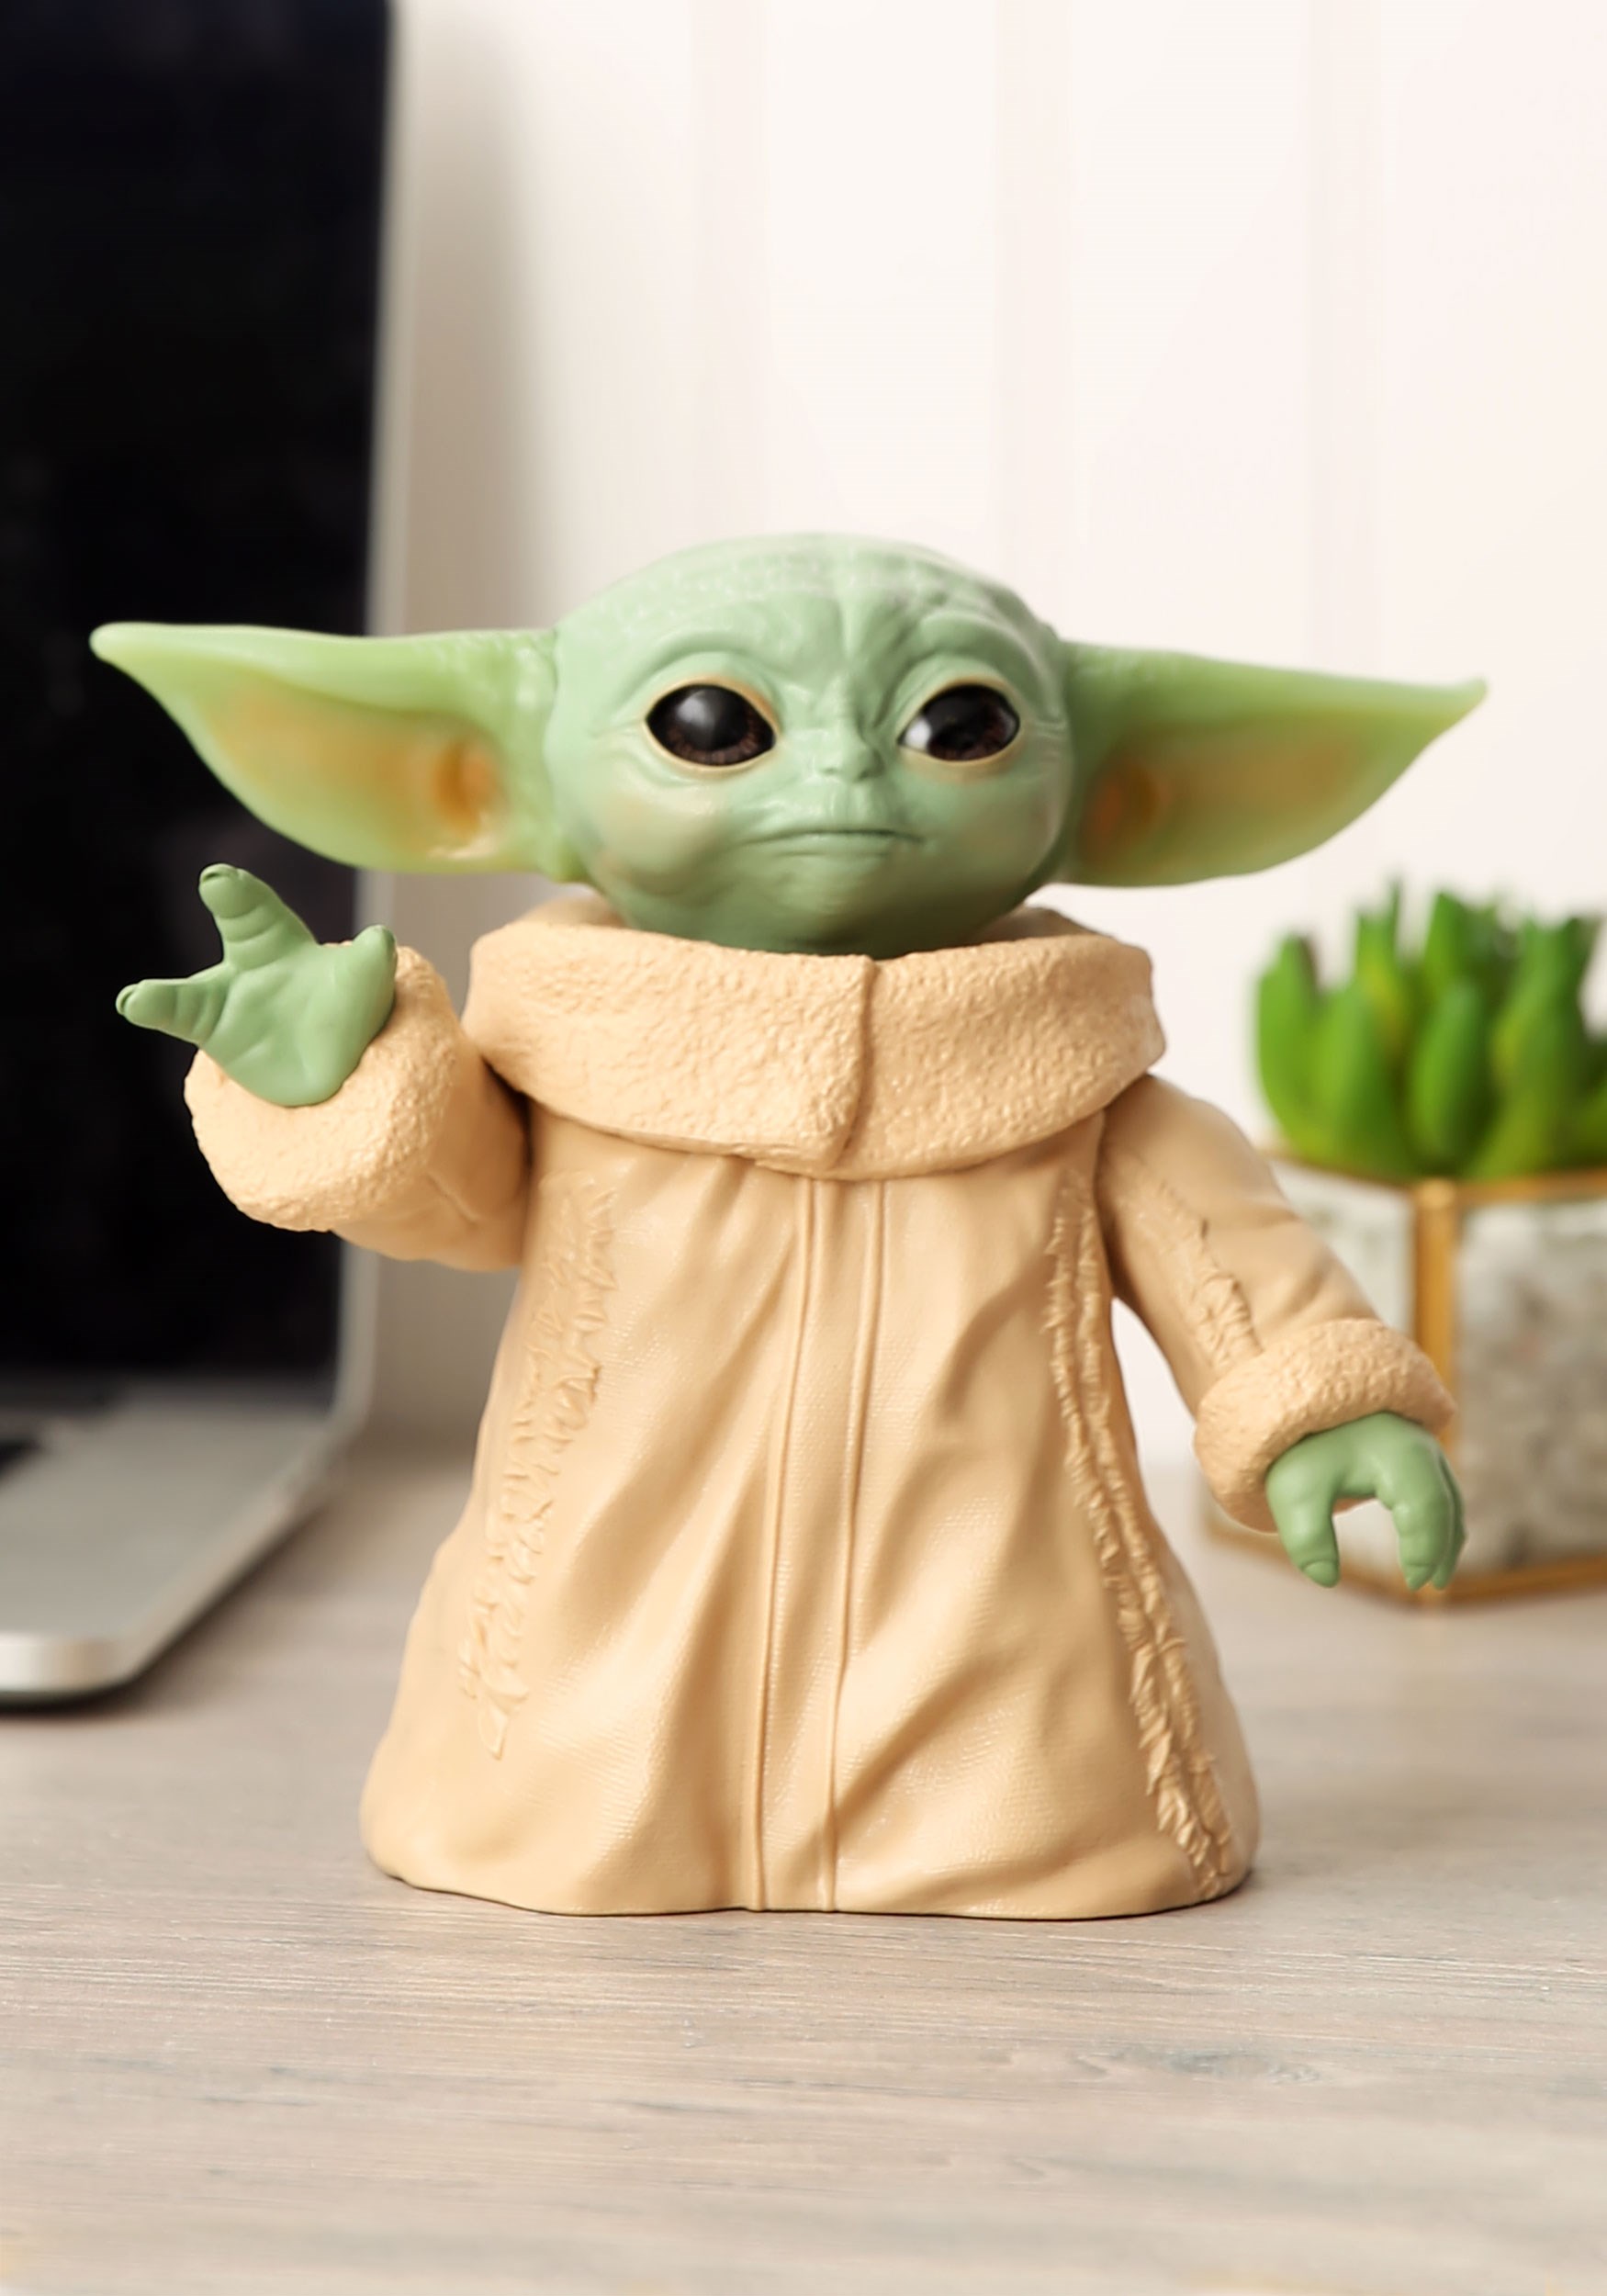 Star Wars Baby Yoda The Child The Mandalorian 6.5-Inch Toy Figure